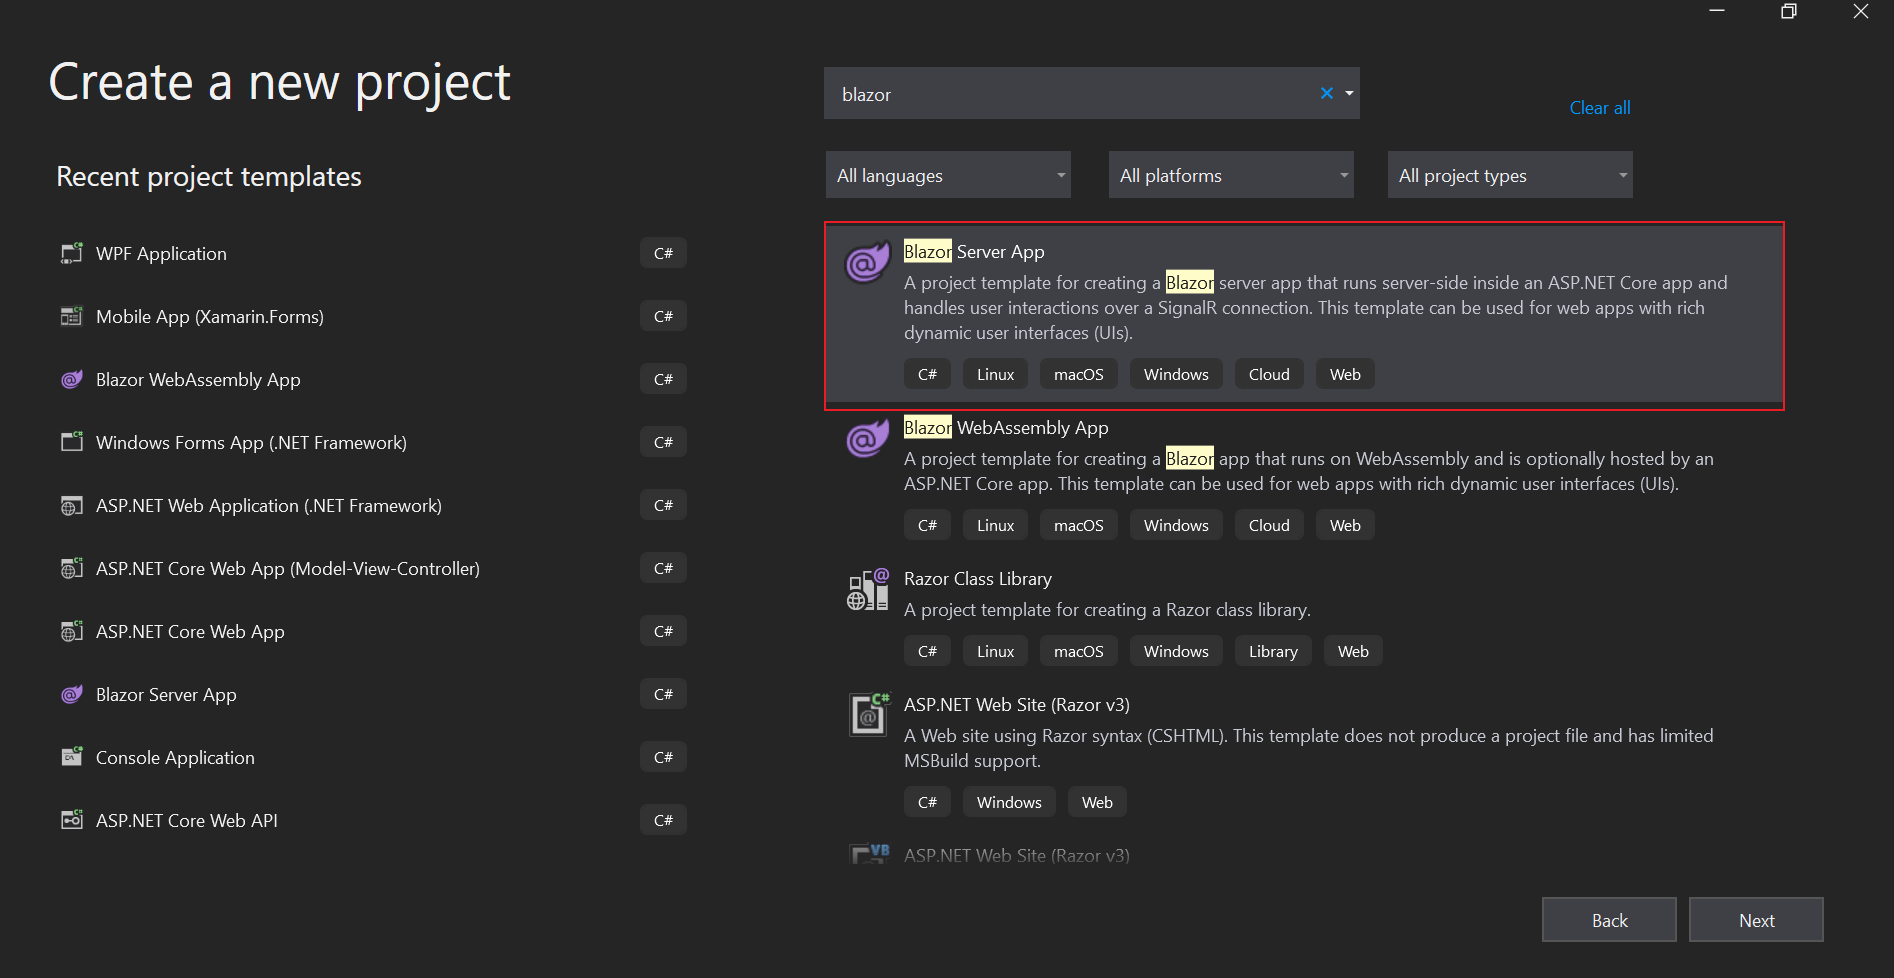 SelectProject